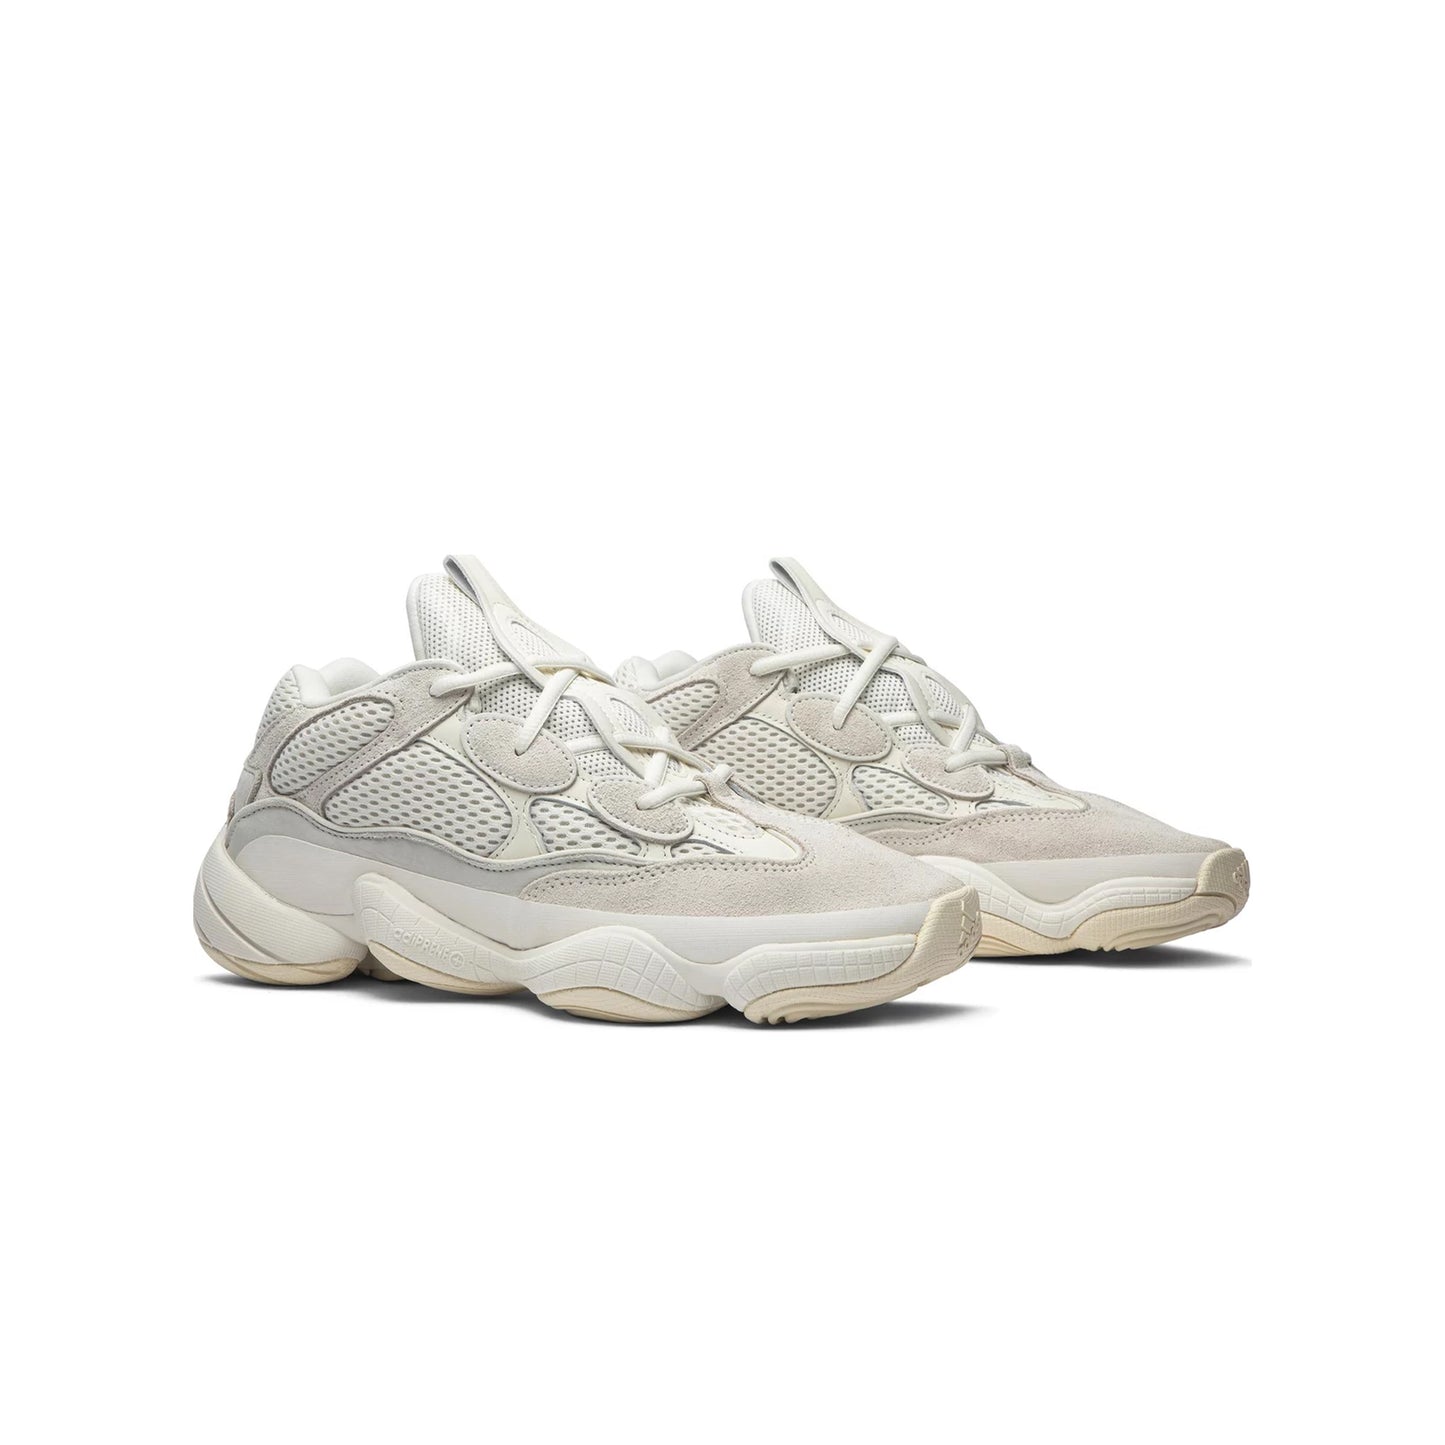 adidas Yeezy 500 Bone White (First Release)